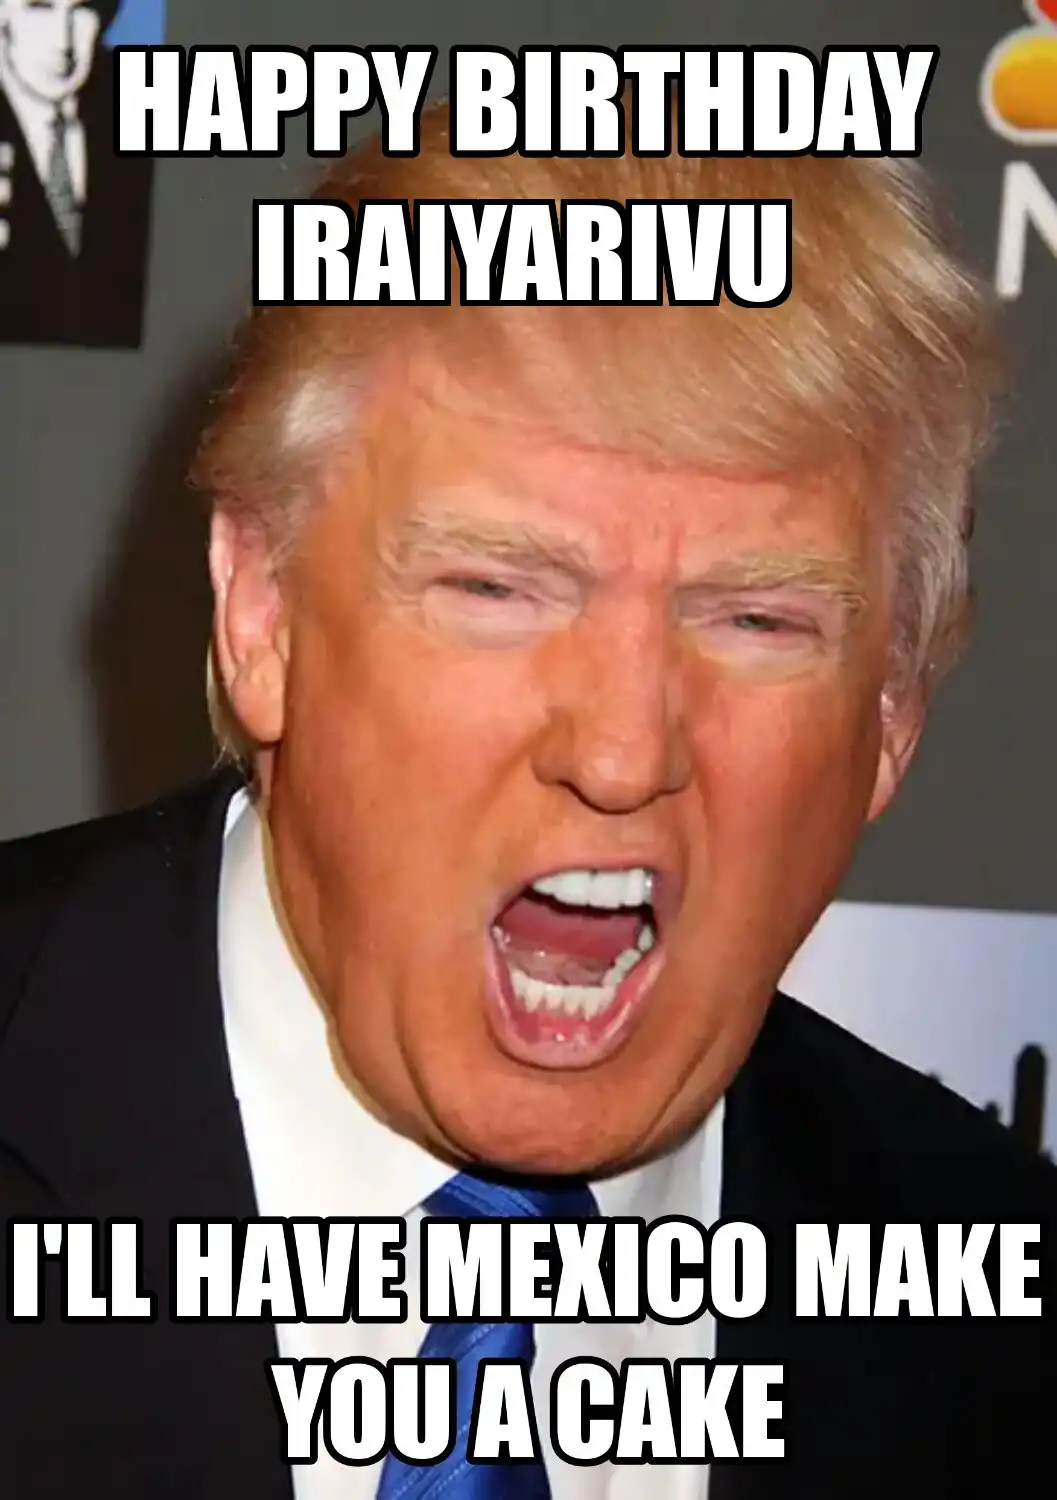 Happy Birthday Iraiyarivu Mexico Make You A Cake Meme